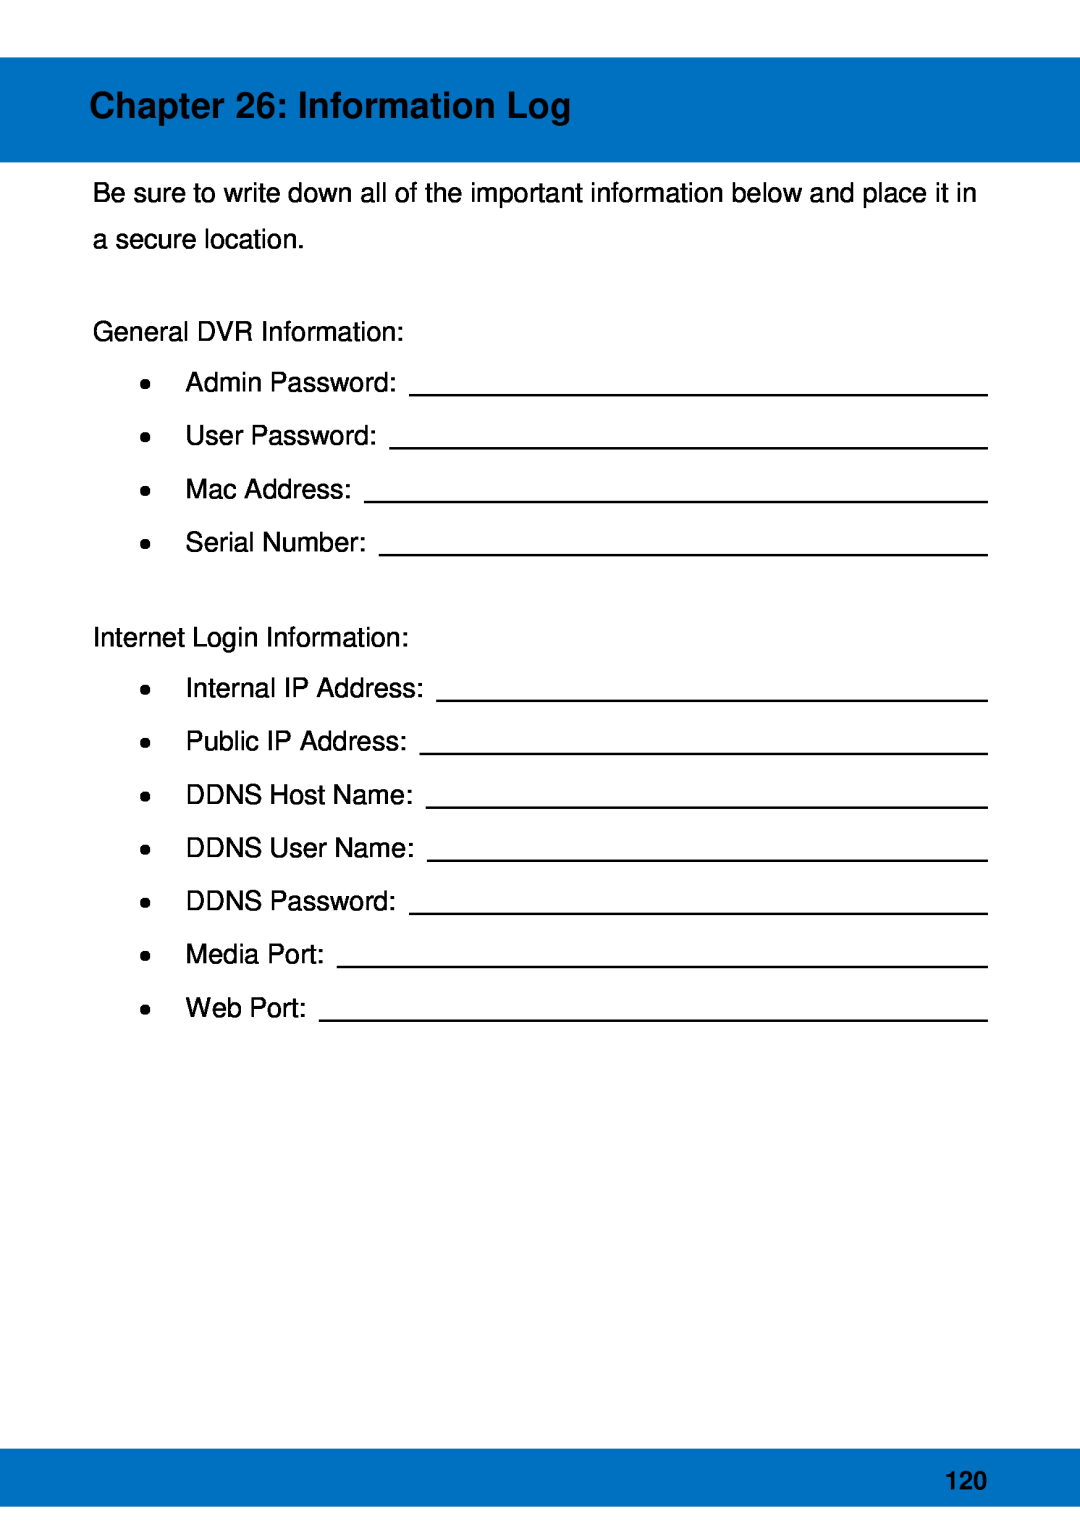 Night Owl Optics Night Owl Pro Remote Access manual Information Log, General DVR Information ∙Admin Password, ∙Web Port 